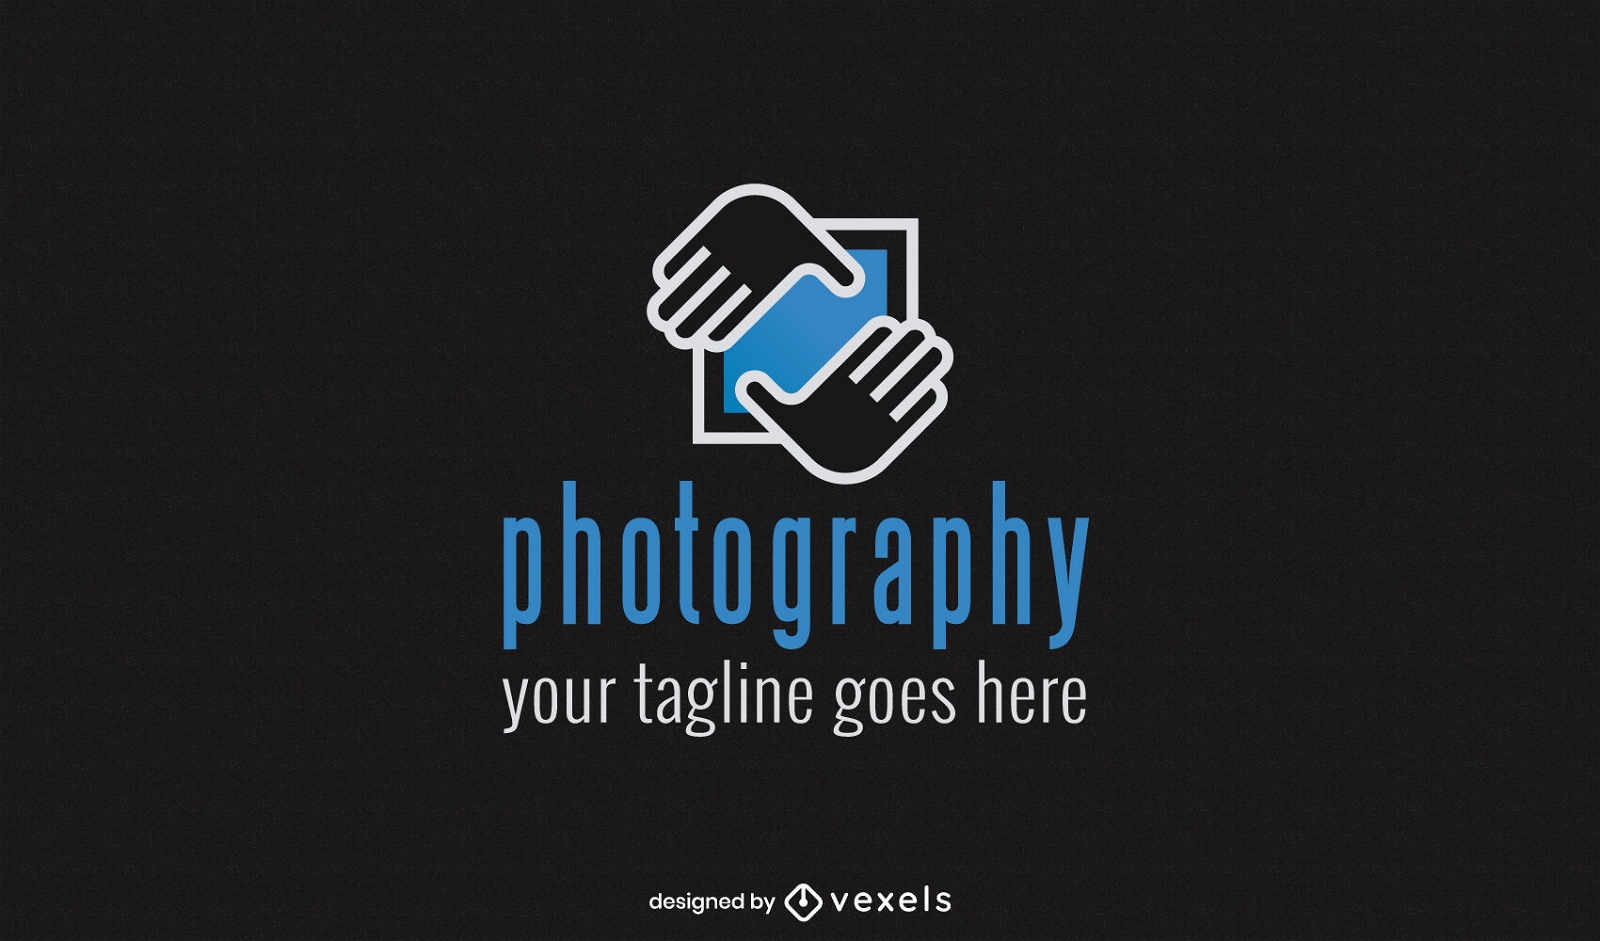 Hands framing photography logo design